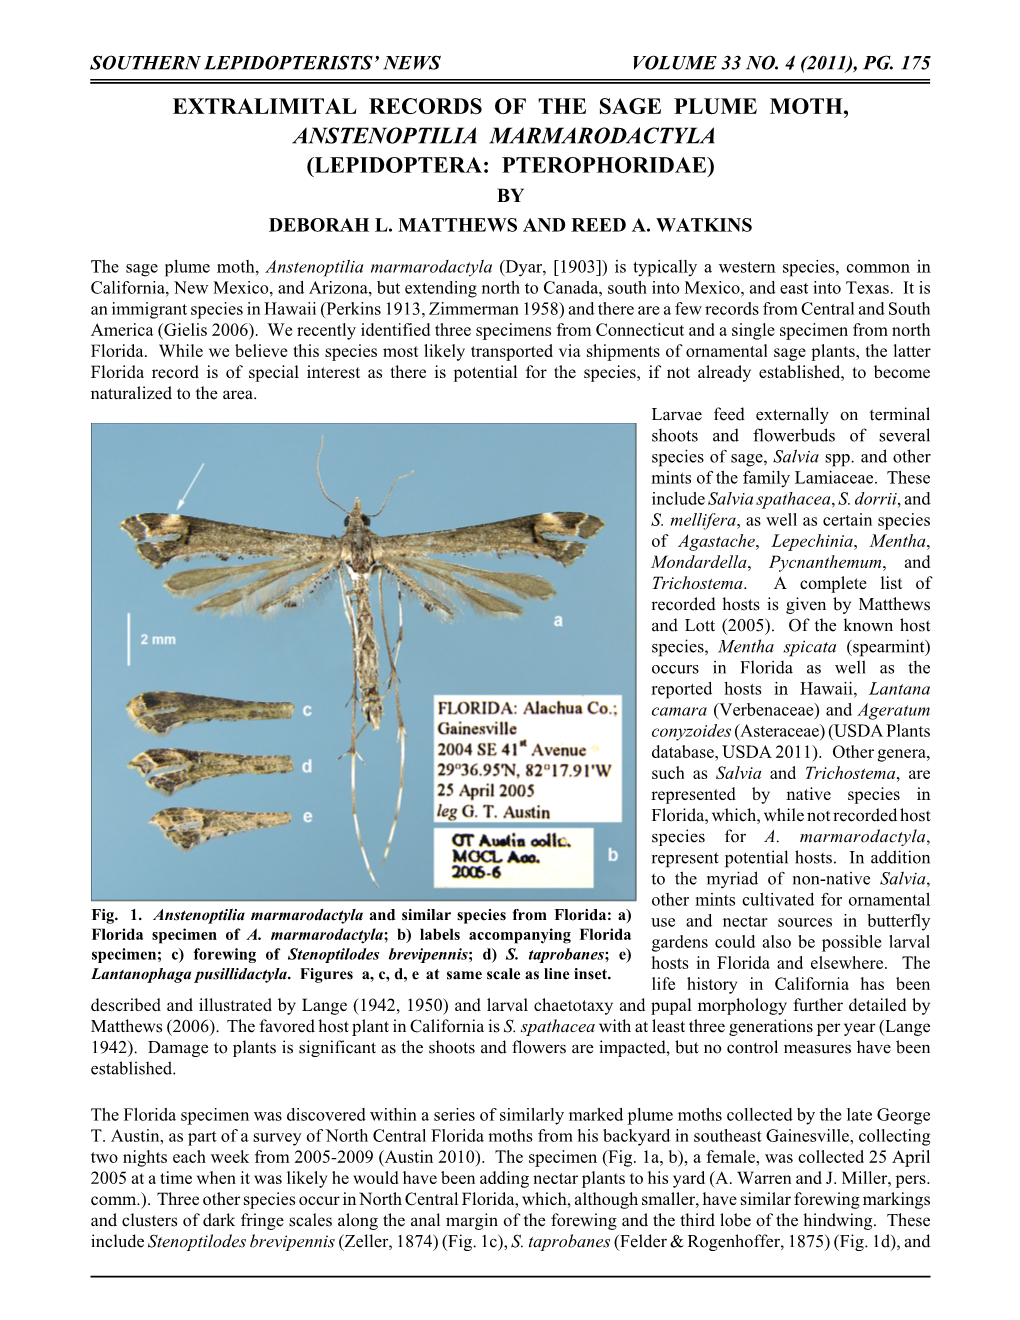 Extralimital Records of the Sage Plume Moth, Anstenoptilia Marmarodactyla (Lepidoptera: Pterophoridae) by Deborah L